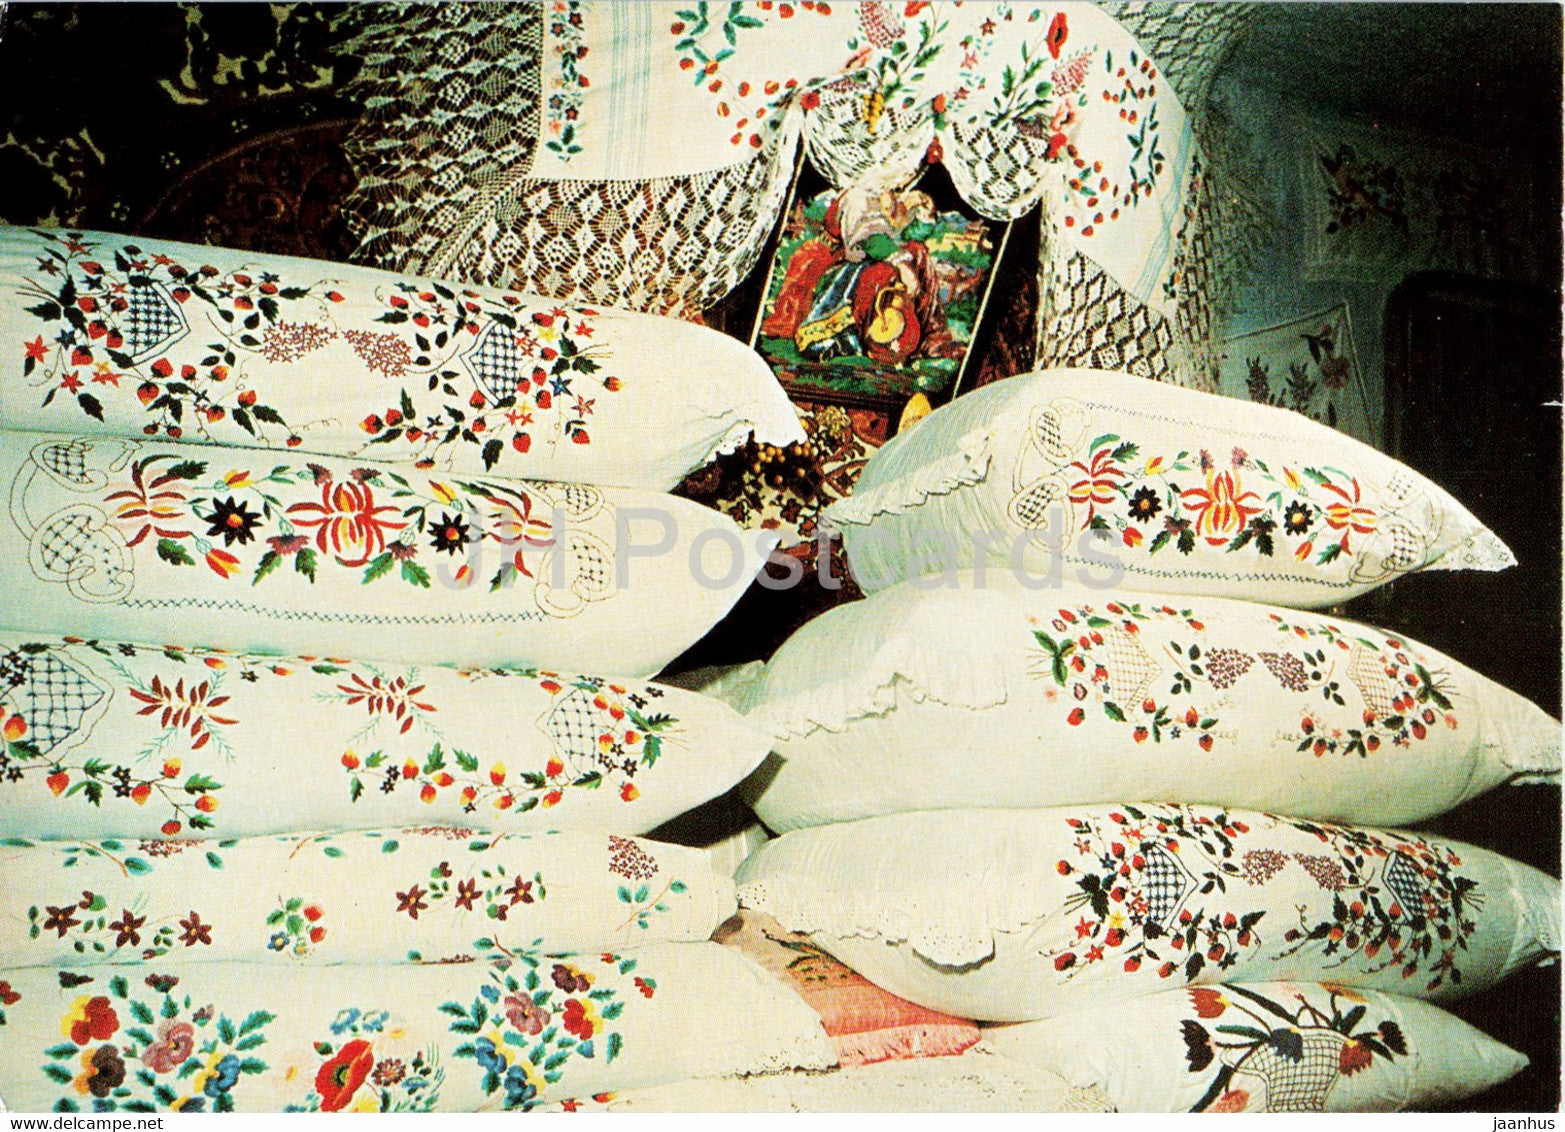 Casa Mare - Embroidery - pillow - handicraft - 1980 - Moldova USSR - unused - JH Postcards